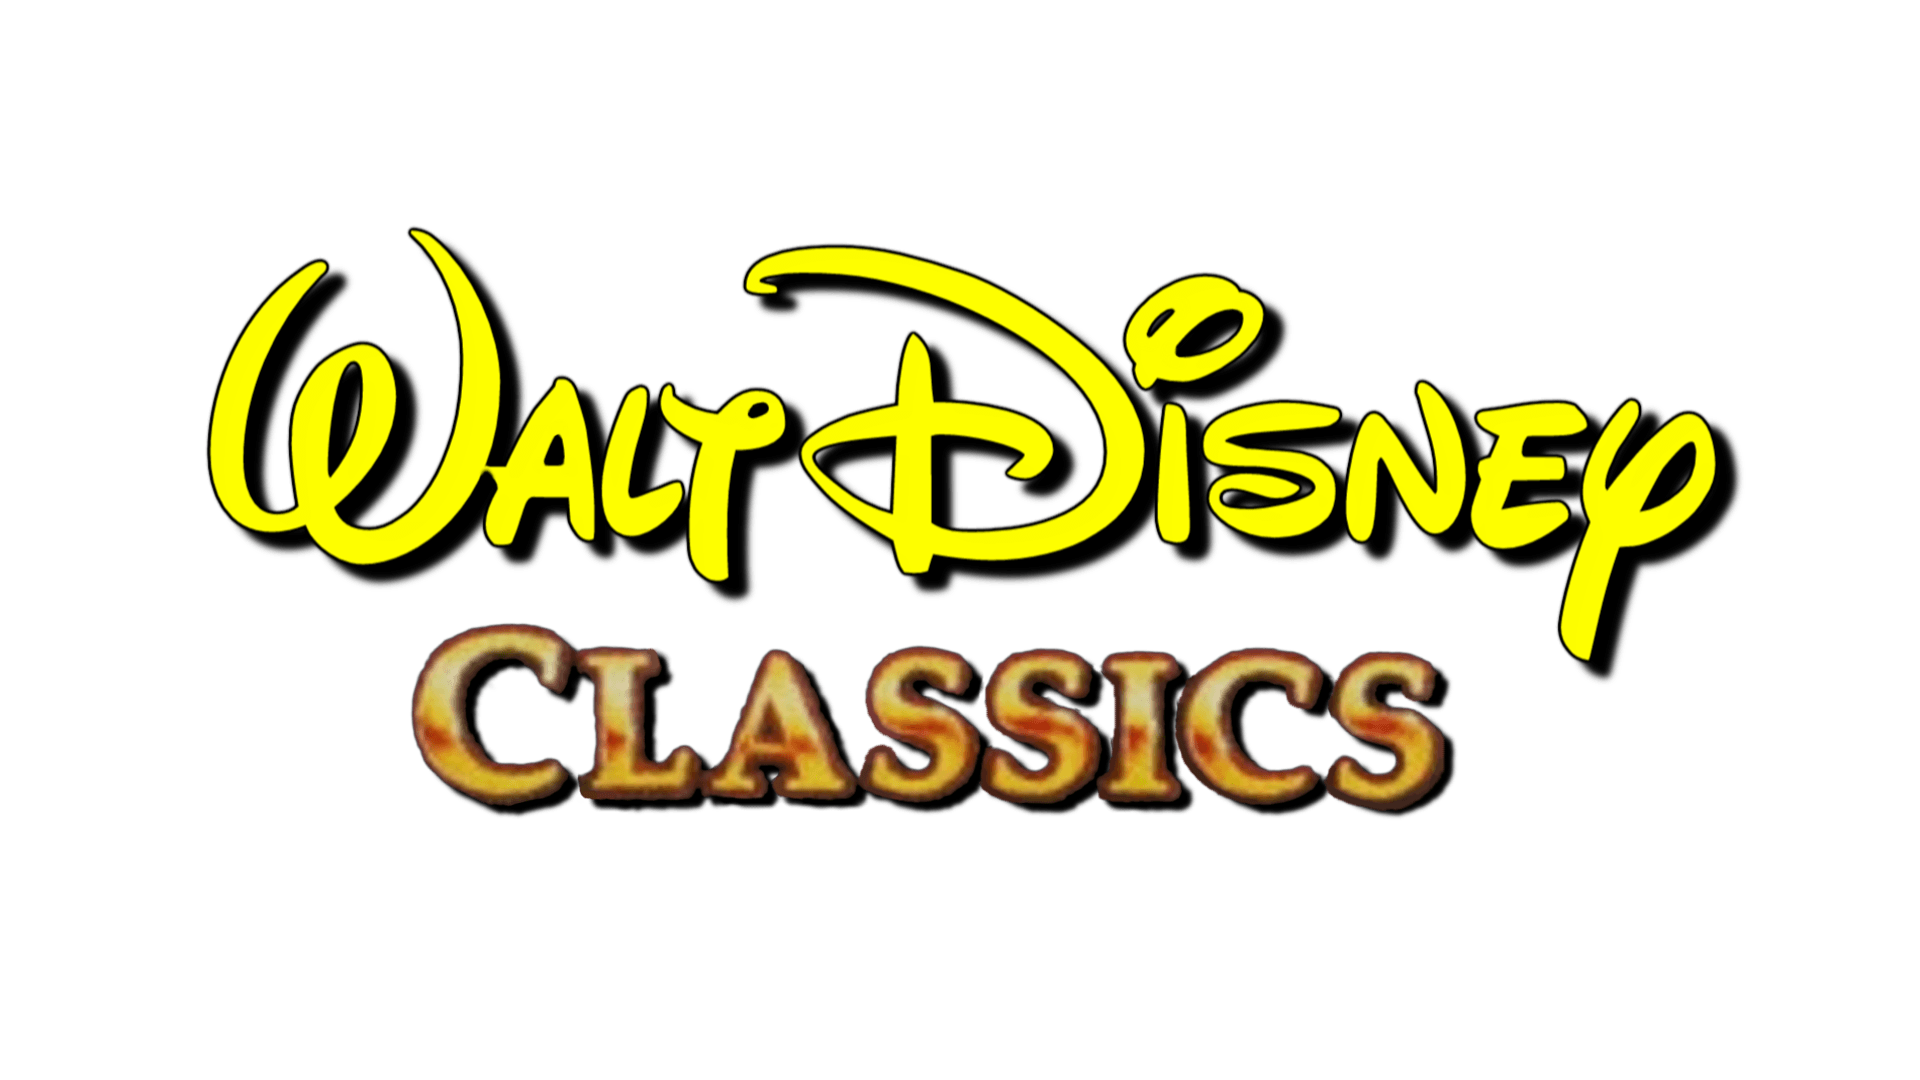 Walt Disney Classics Logo - Image - Walt Disney Classics 1991-1997 Print Logo.png | Idea Wiki ...